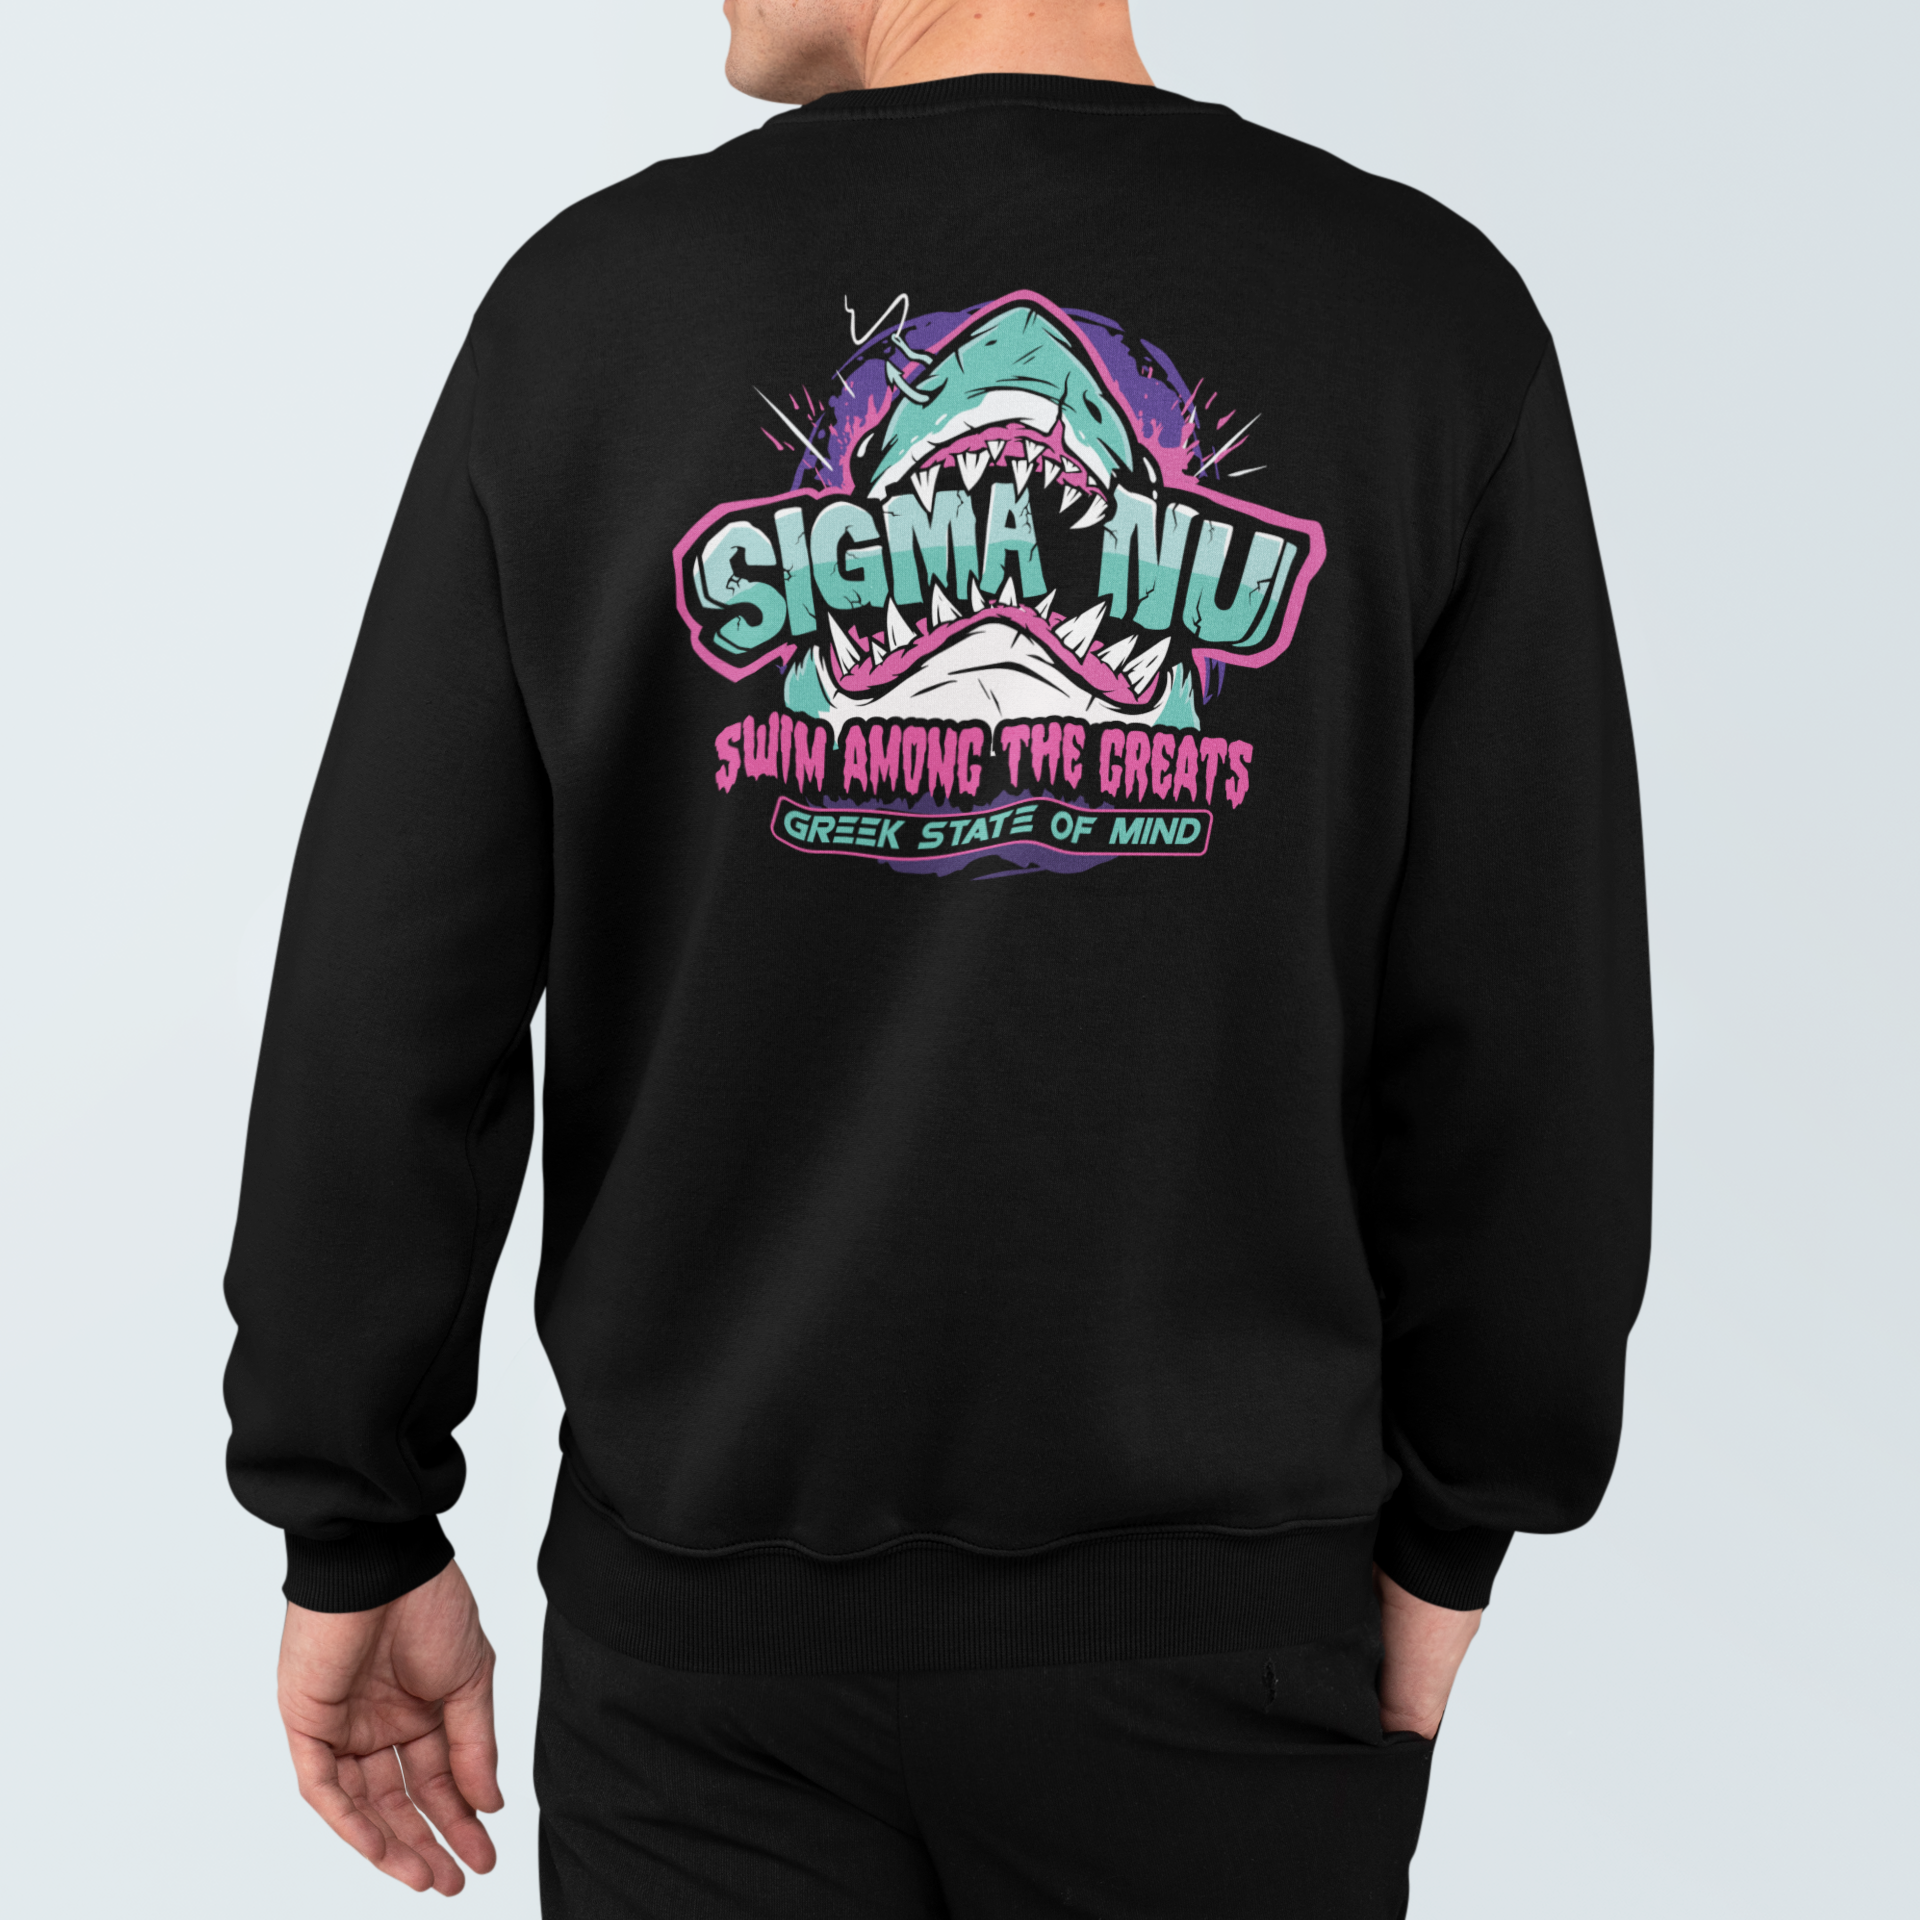 Sigma Nu Graphic Crewneck Sweatshirt | The Deep End | Sigma Nu Clothing, Apparel and Merchandise model 